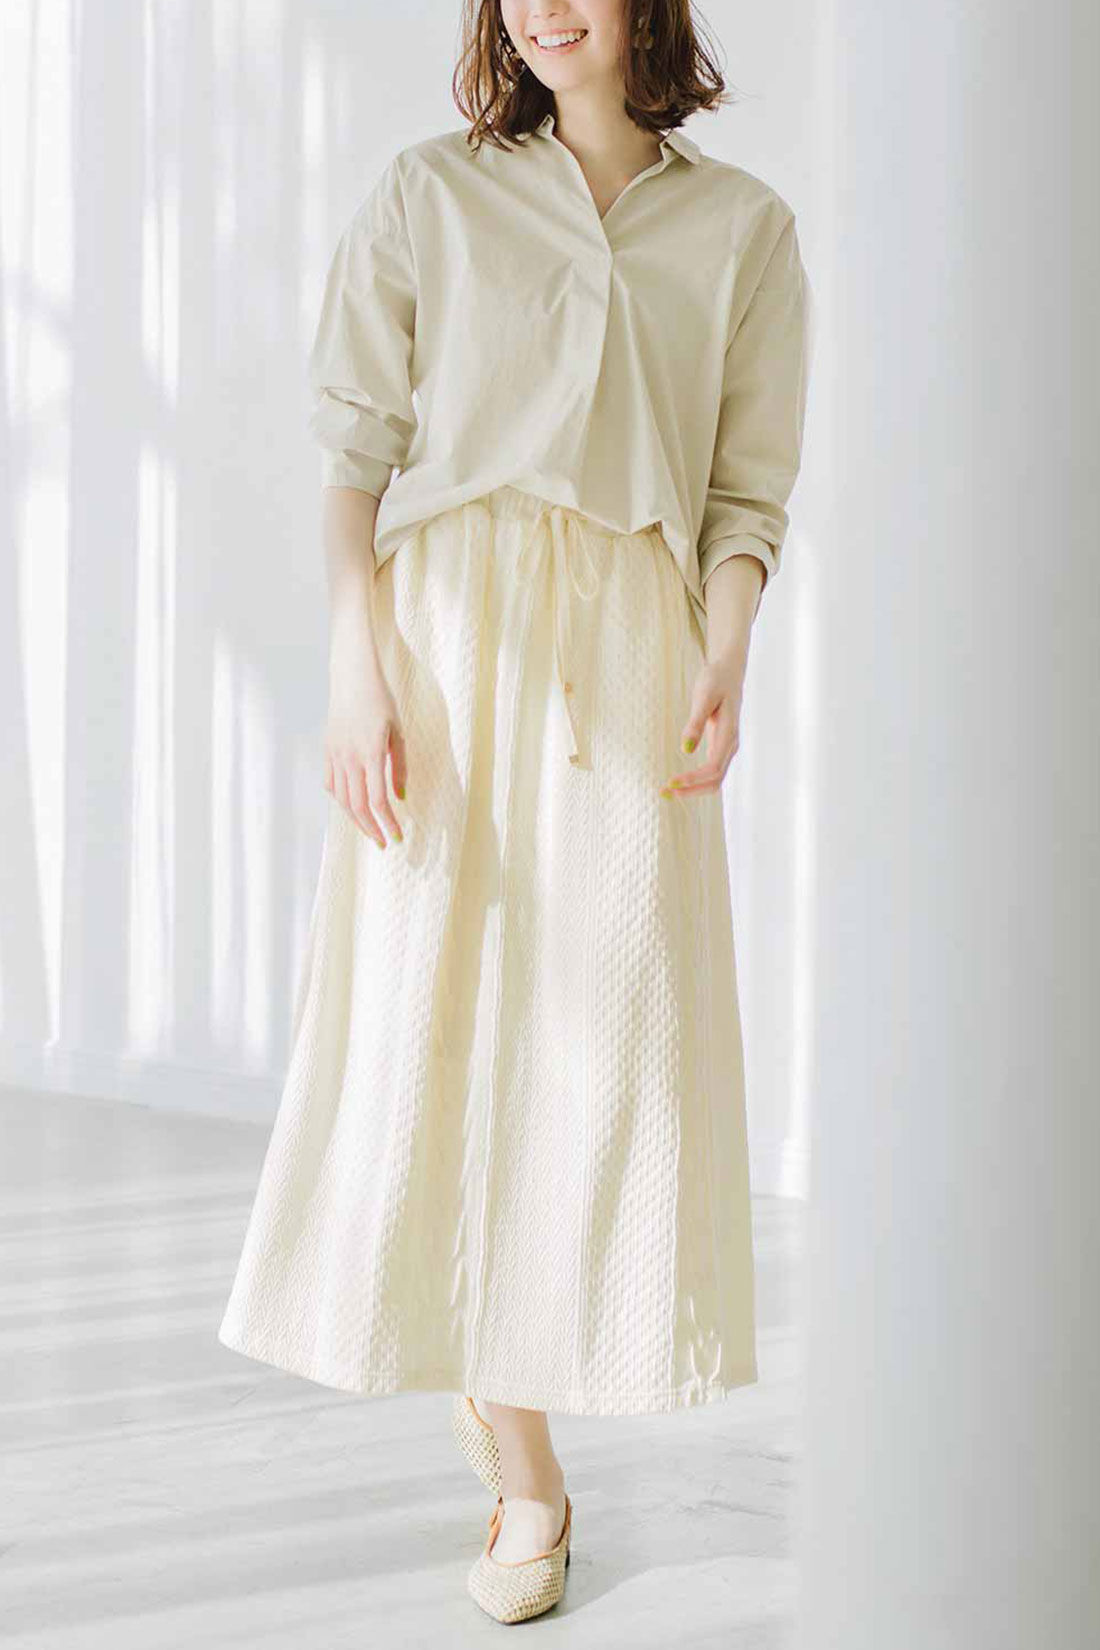 Live in  comfort|Live love cottonプロジェクト　リブ イン コンフォート　編み柄が素敵なオーガニックコットンロングスカート〈アイボリー〉|※着用イメージです。お届けするカラーとは異なります。